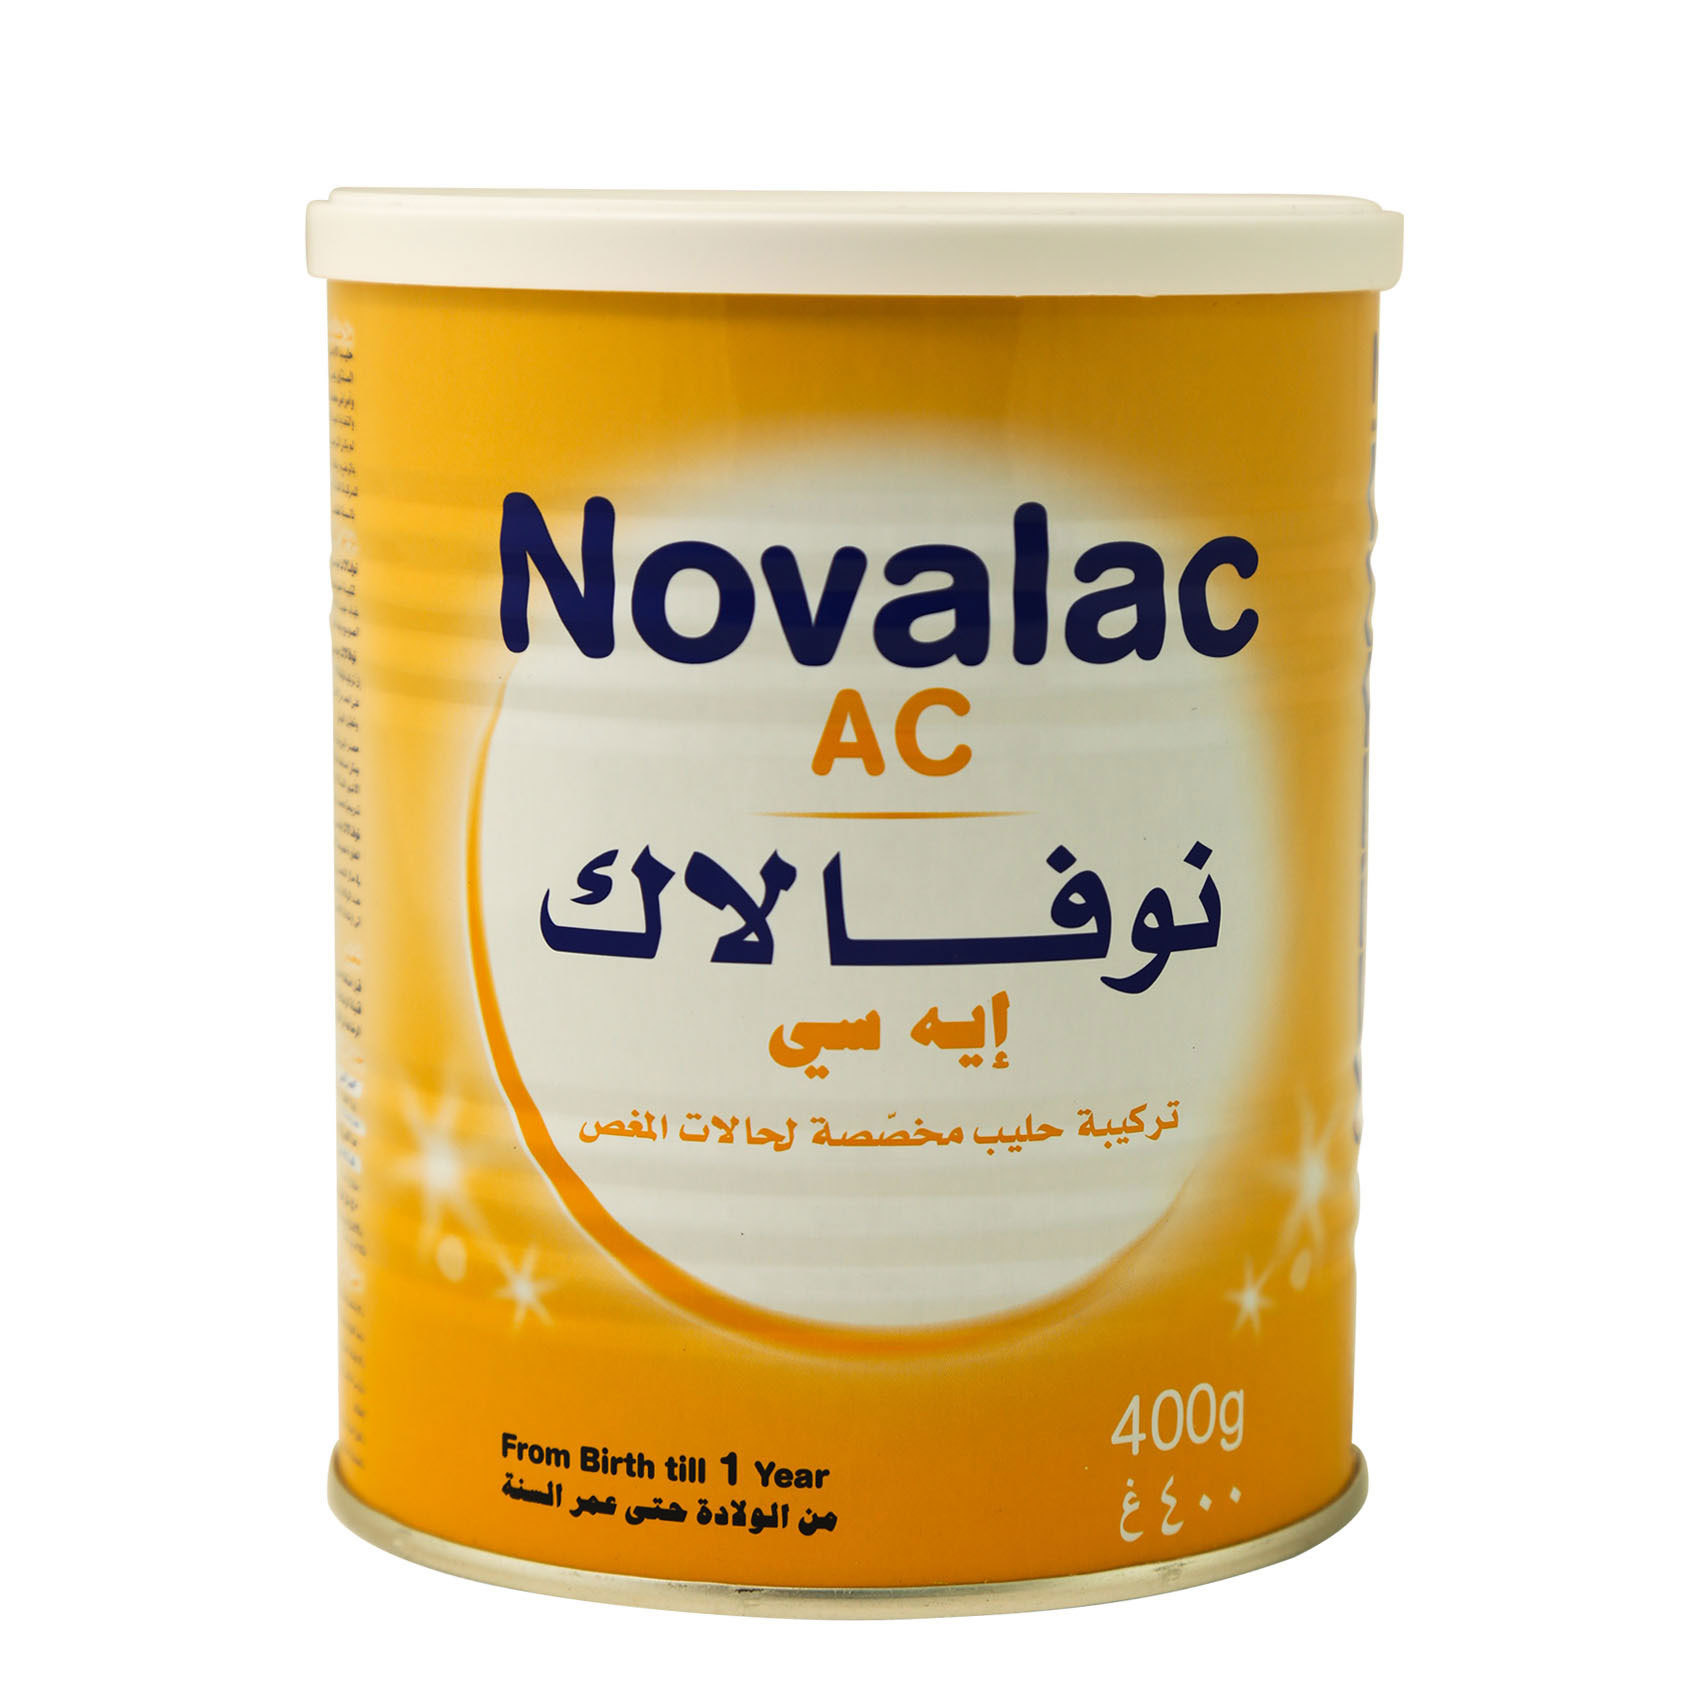 Novalac Premium 1 starter milk, 400 g